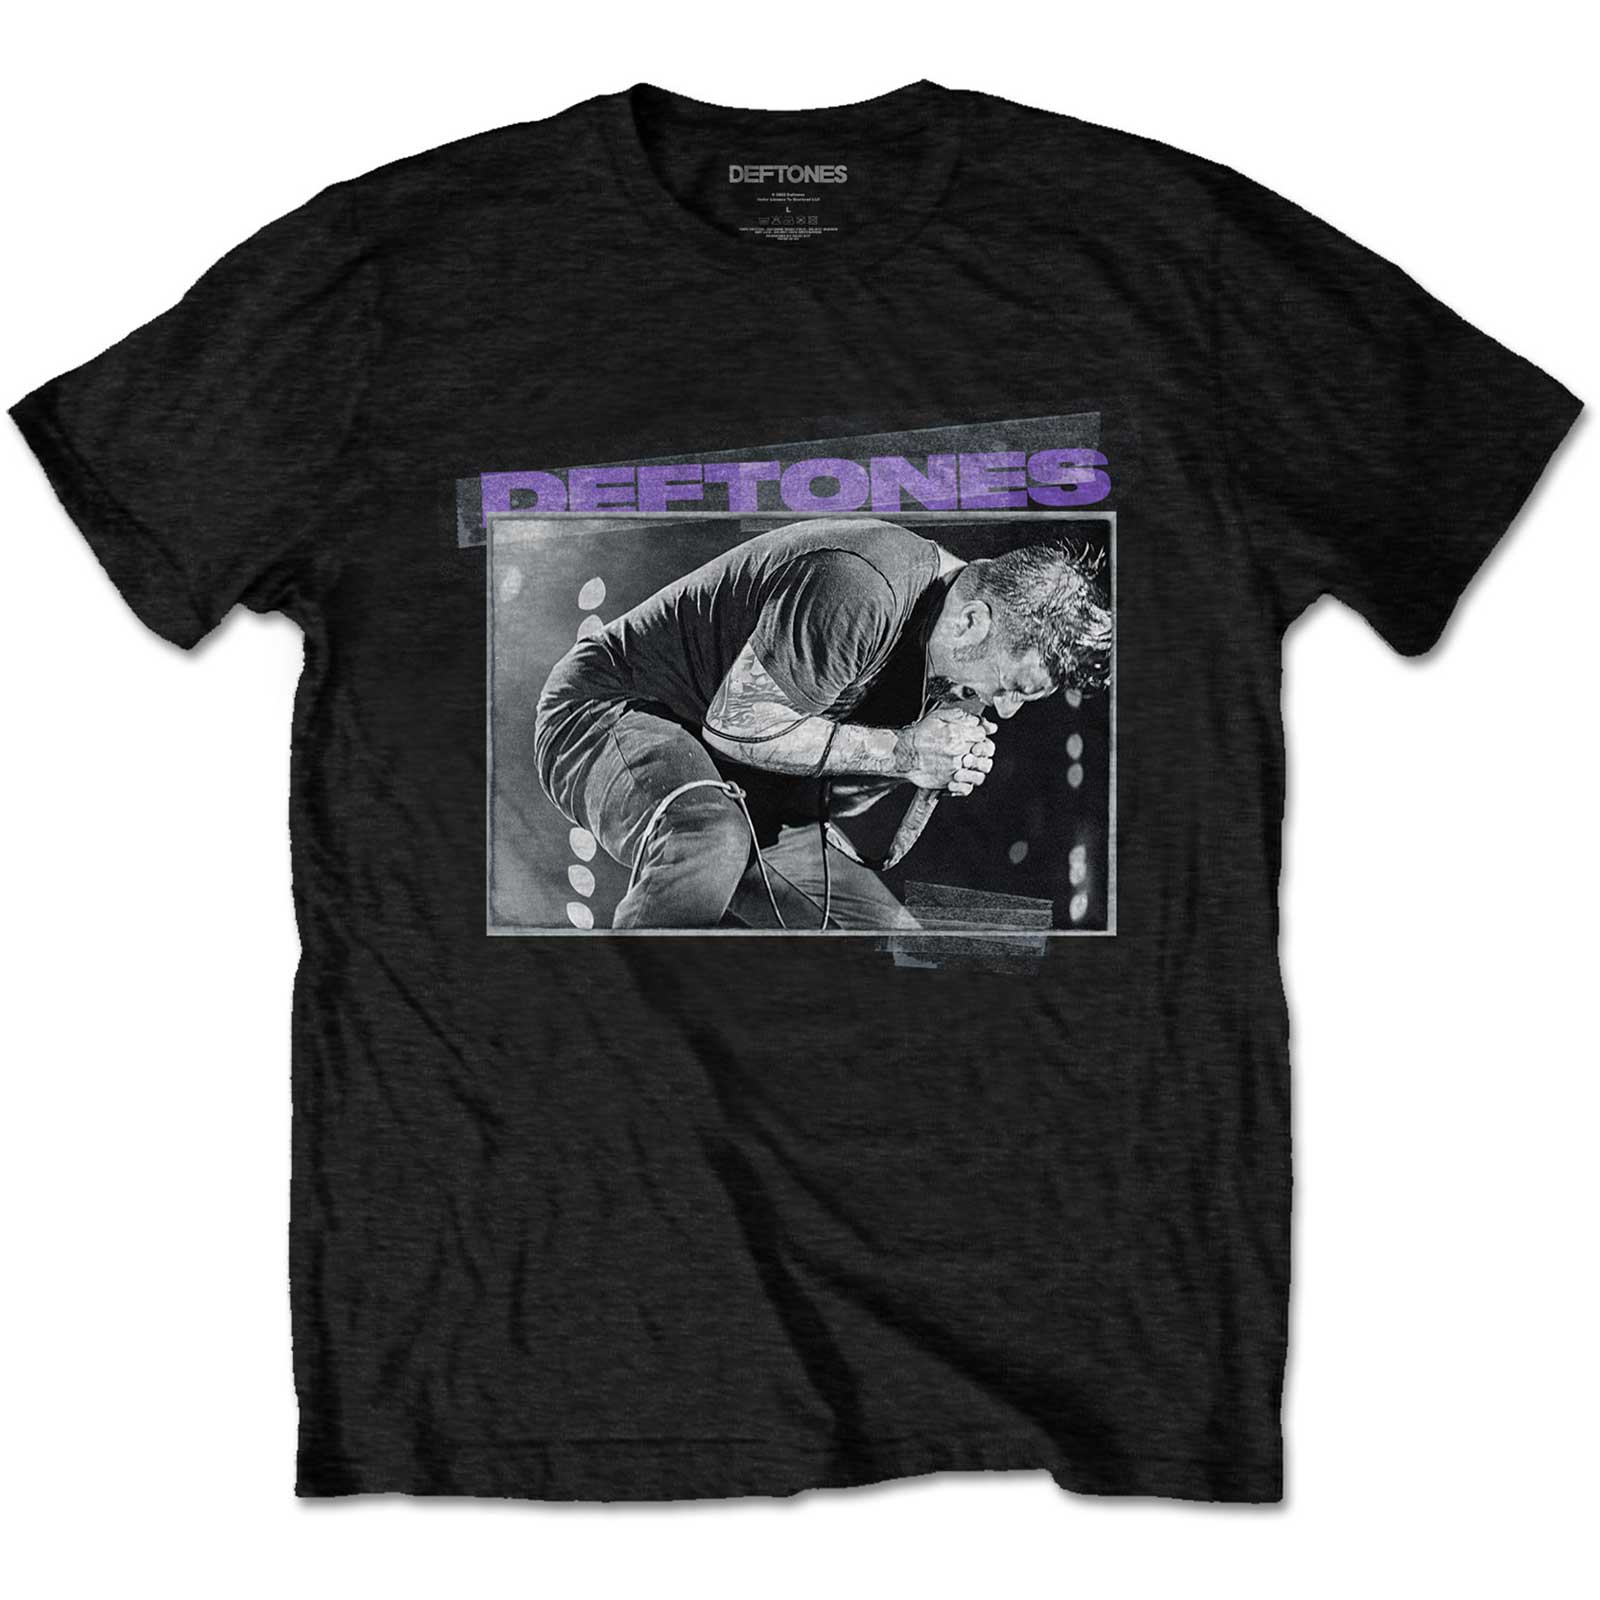 Deftones T-Shirt - Chino Moreno Live (Unisex)